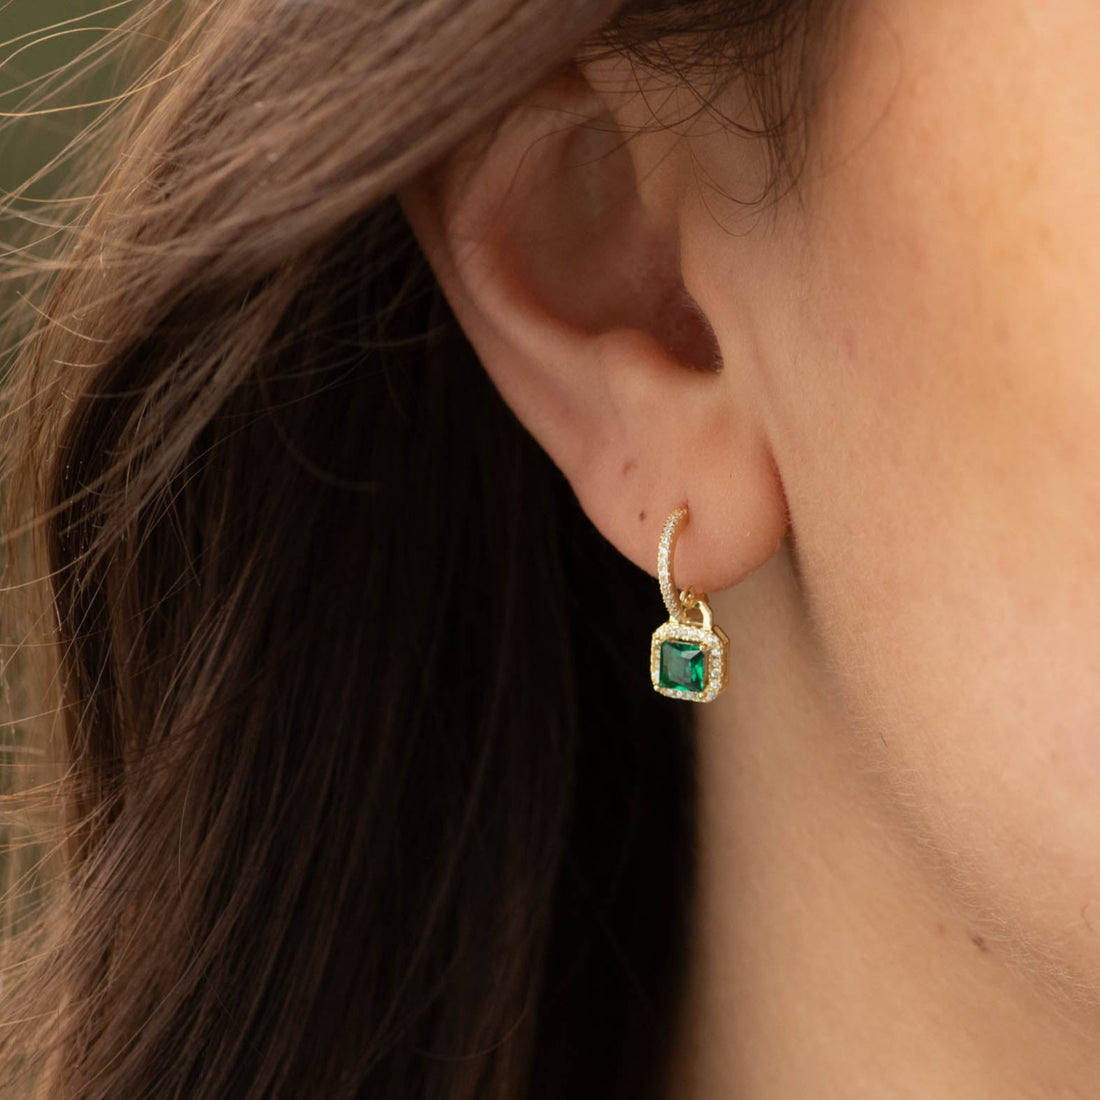 May Birthstone Emerald Earrings